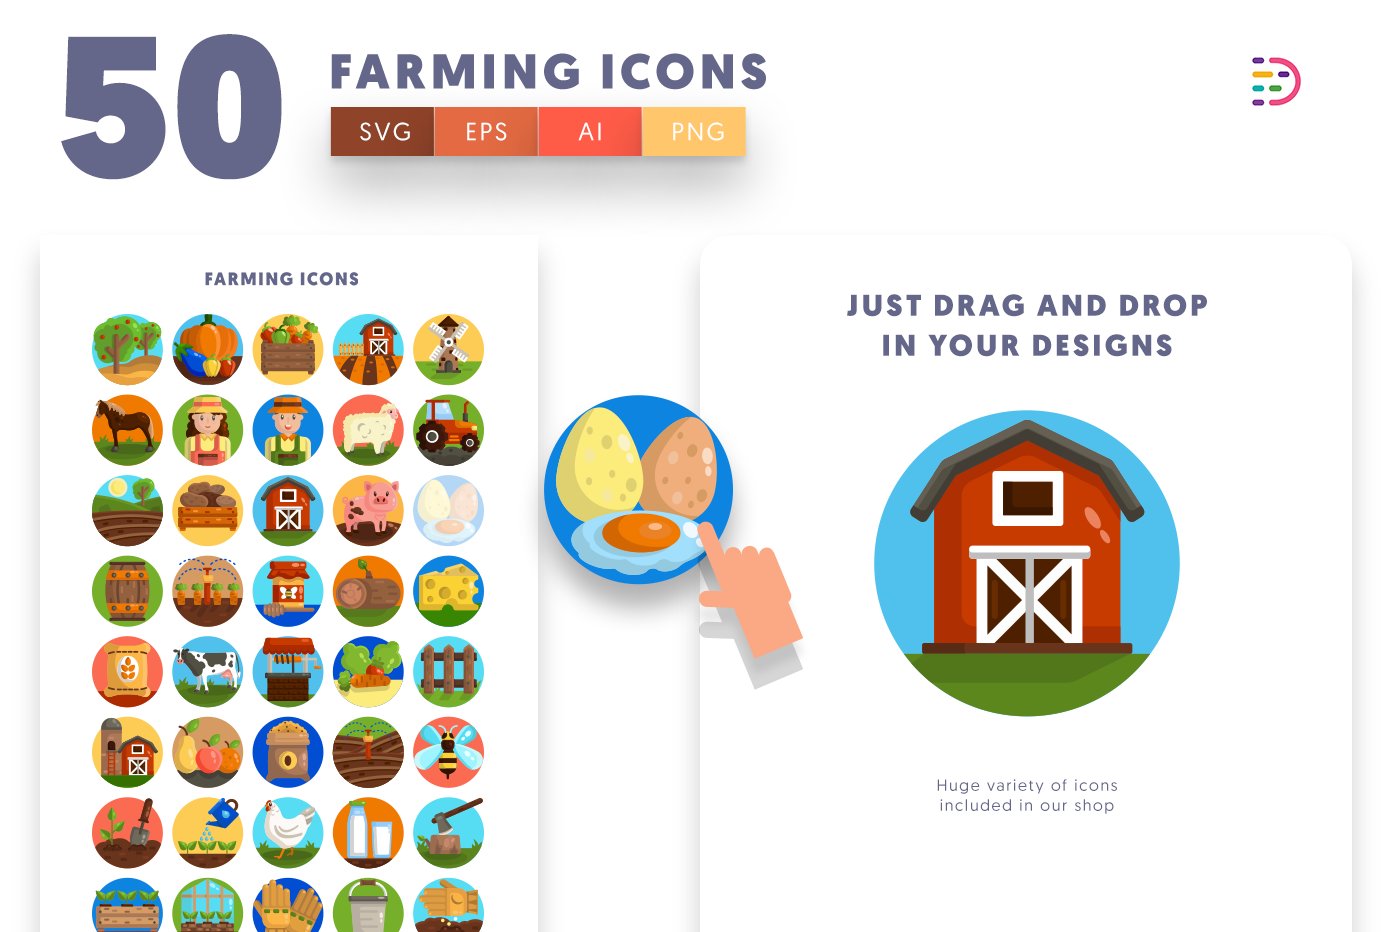 farming icons cover 1 613